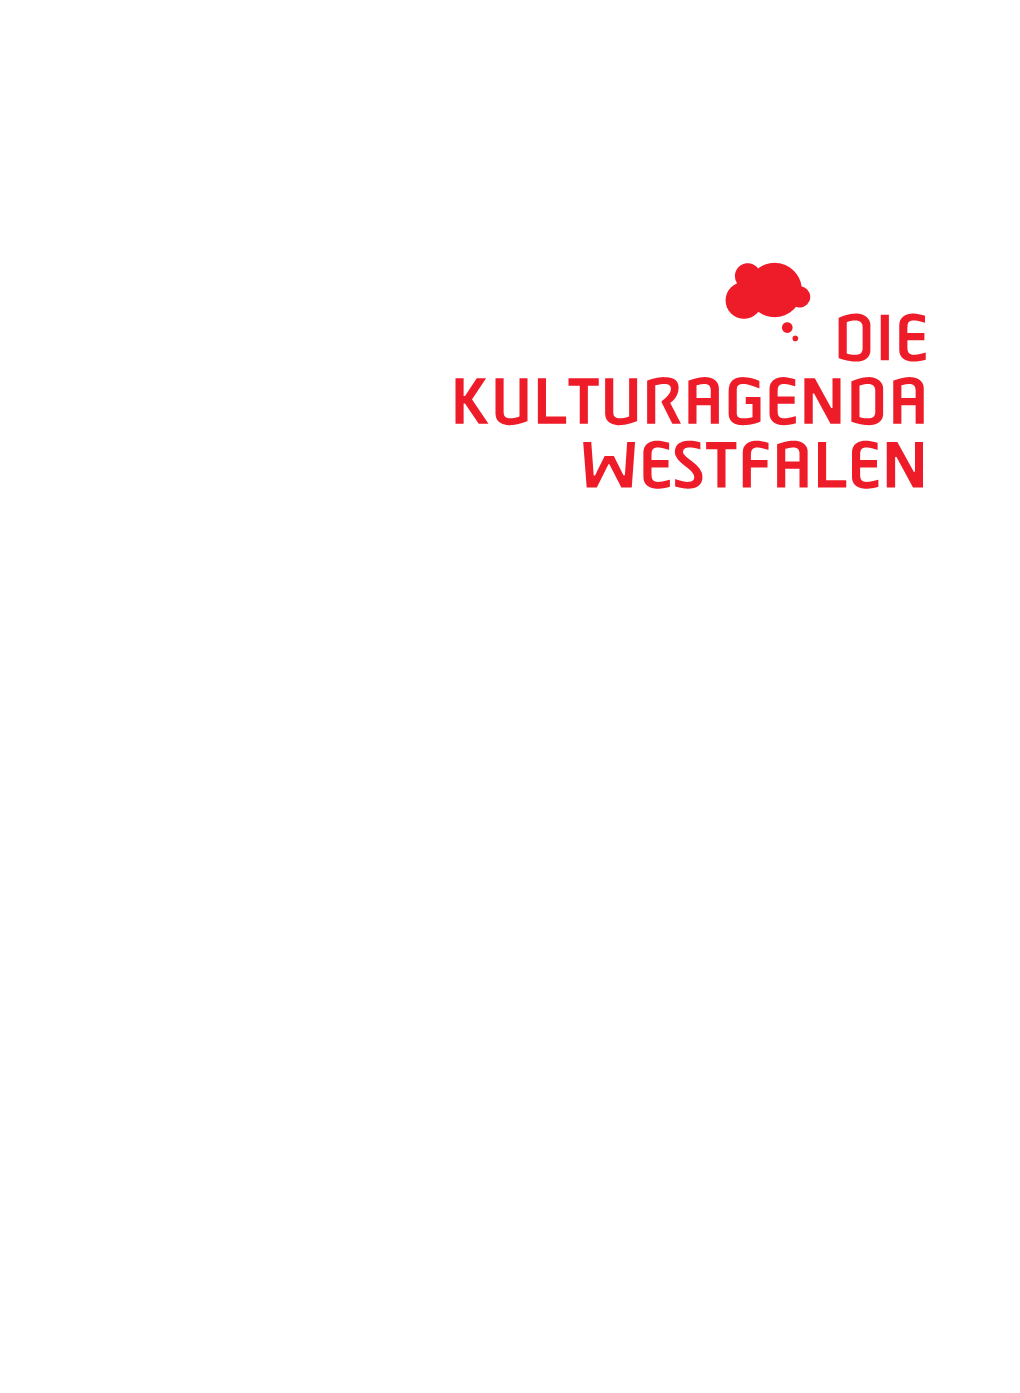 LWL Kulturagenda Westfalen